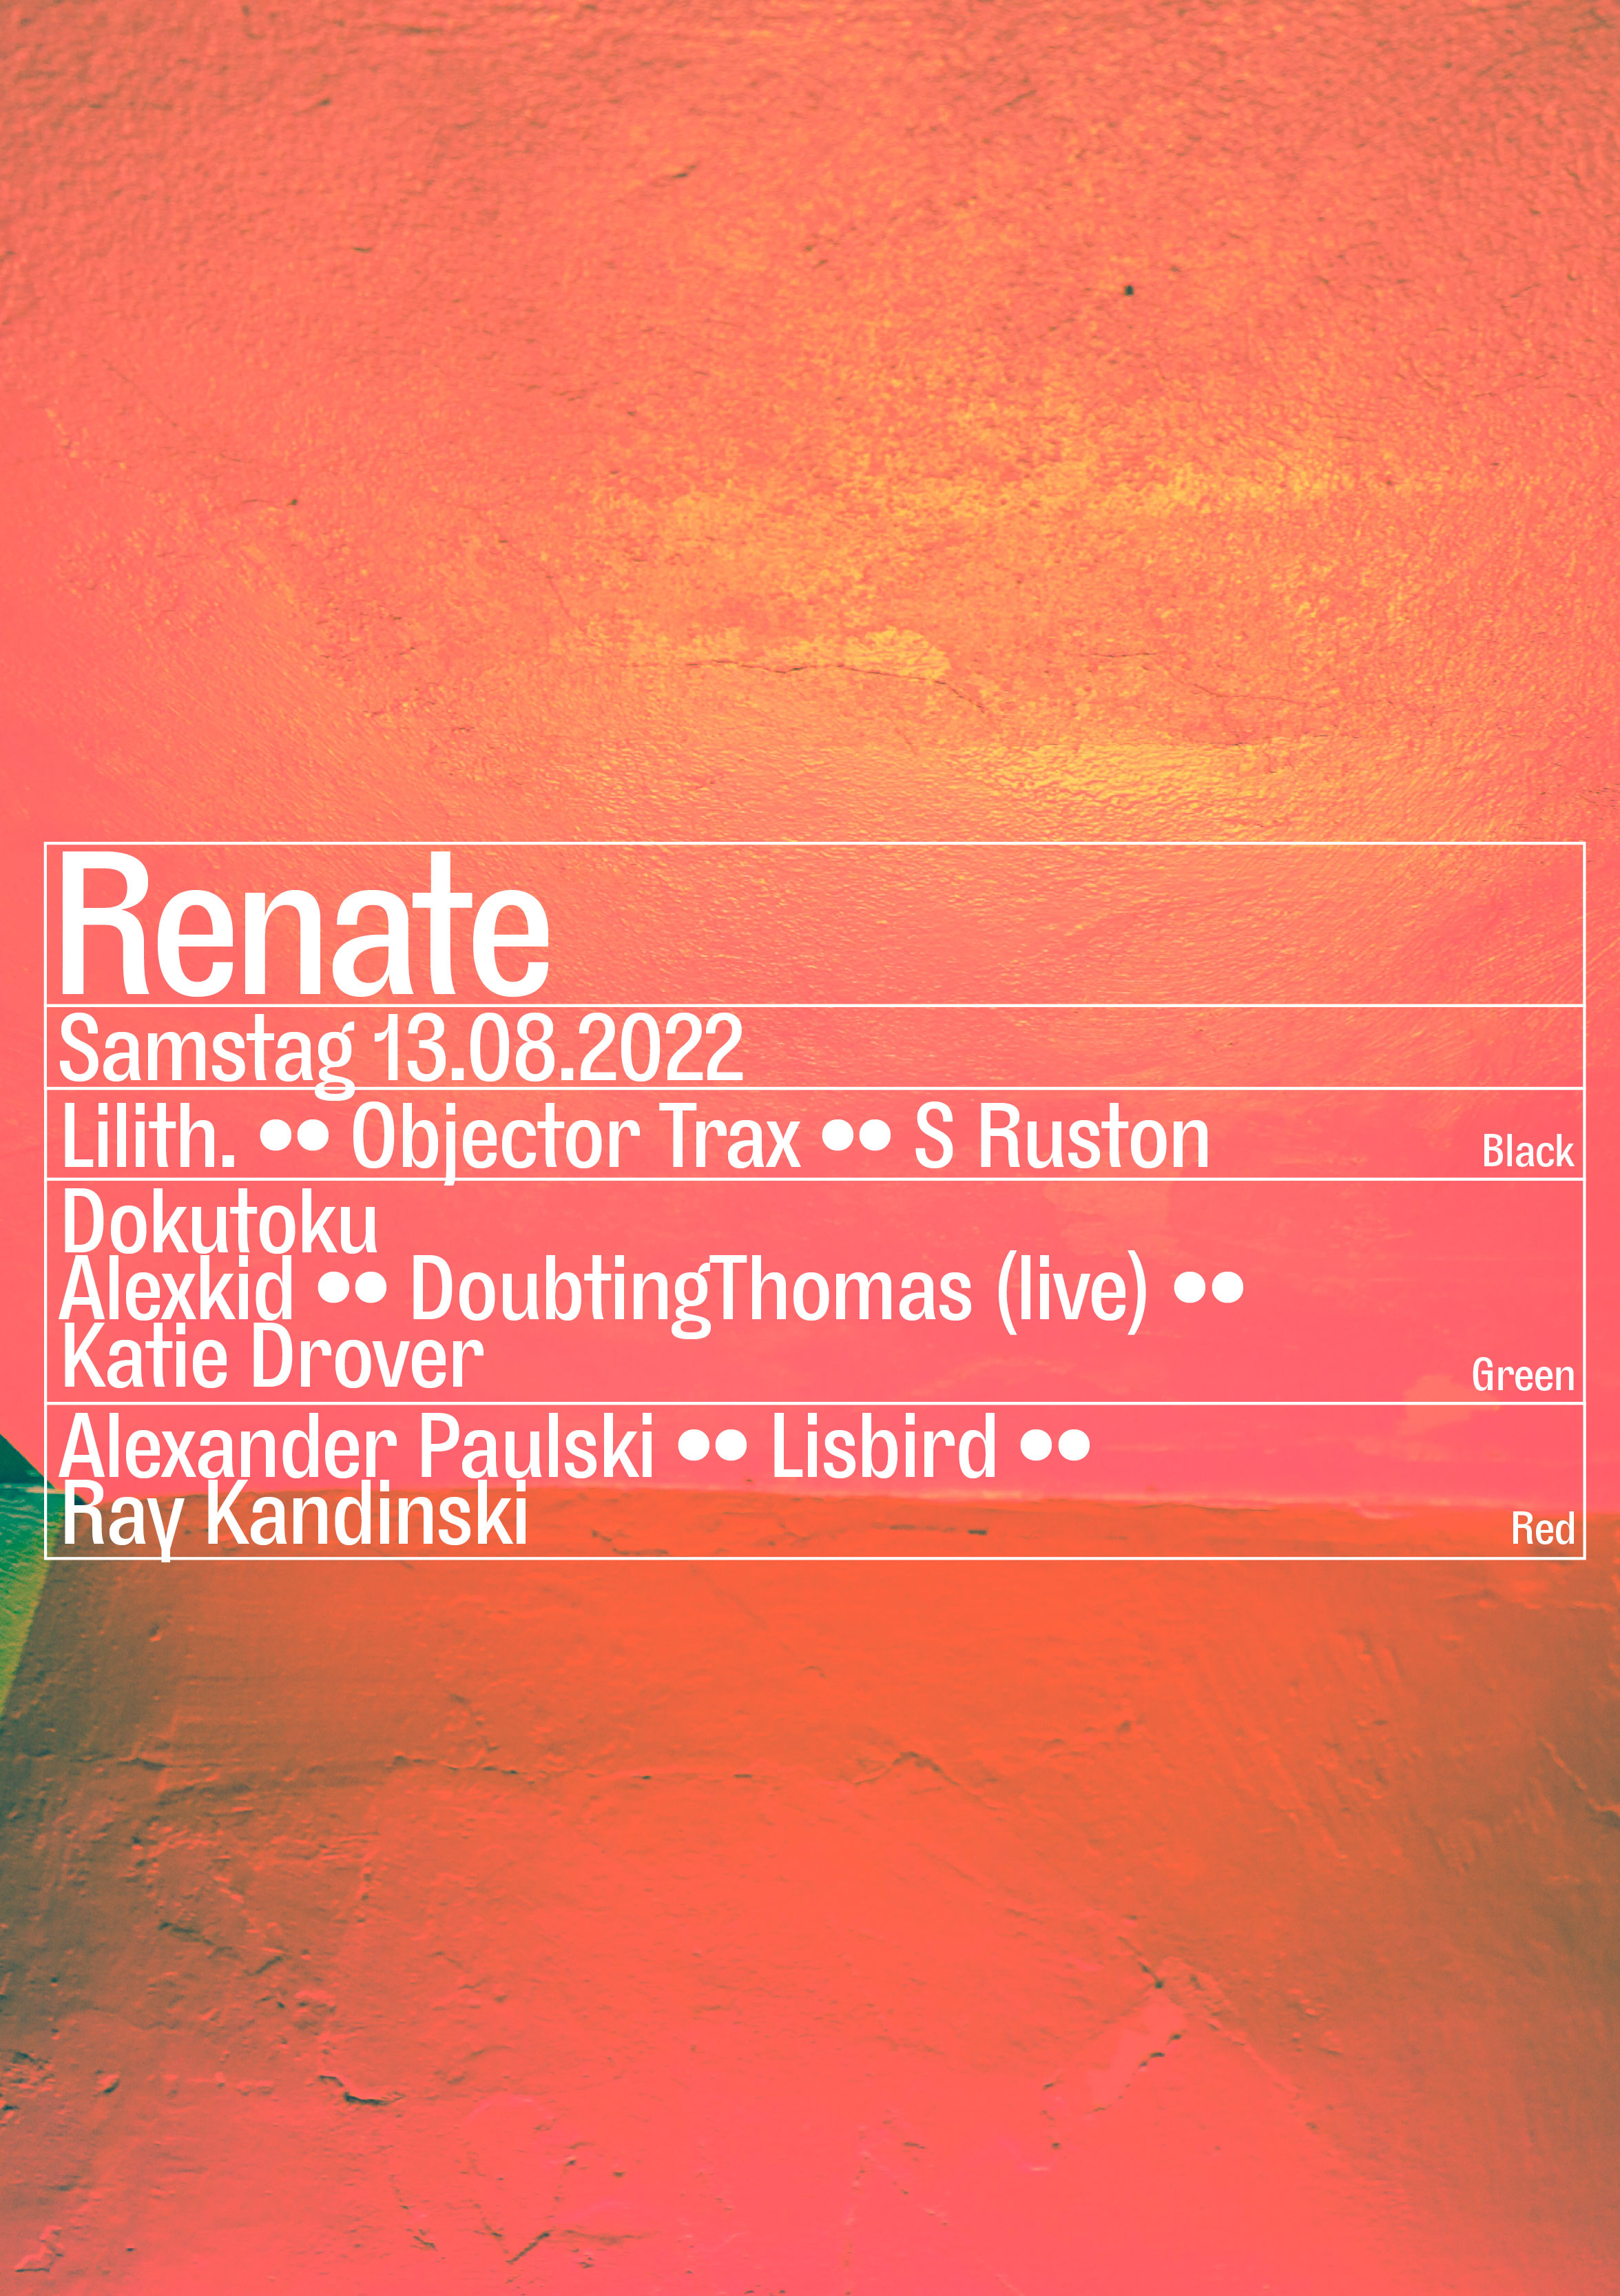 Renate with DoubtingThomas, Lilith., Ray Kandinski, S Ruston - Flyer front